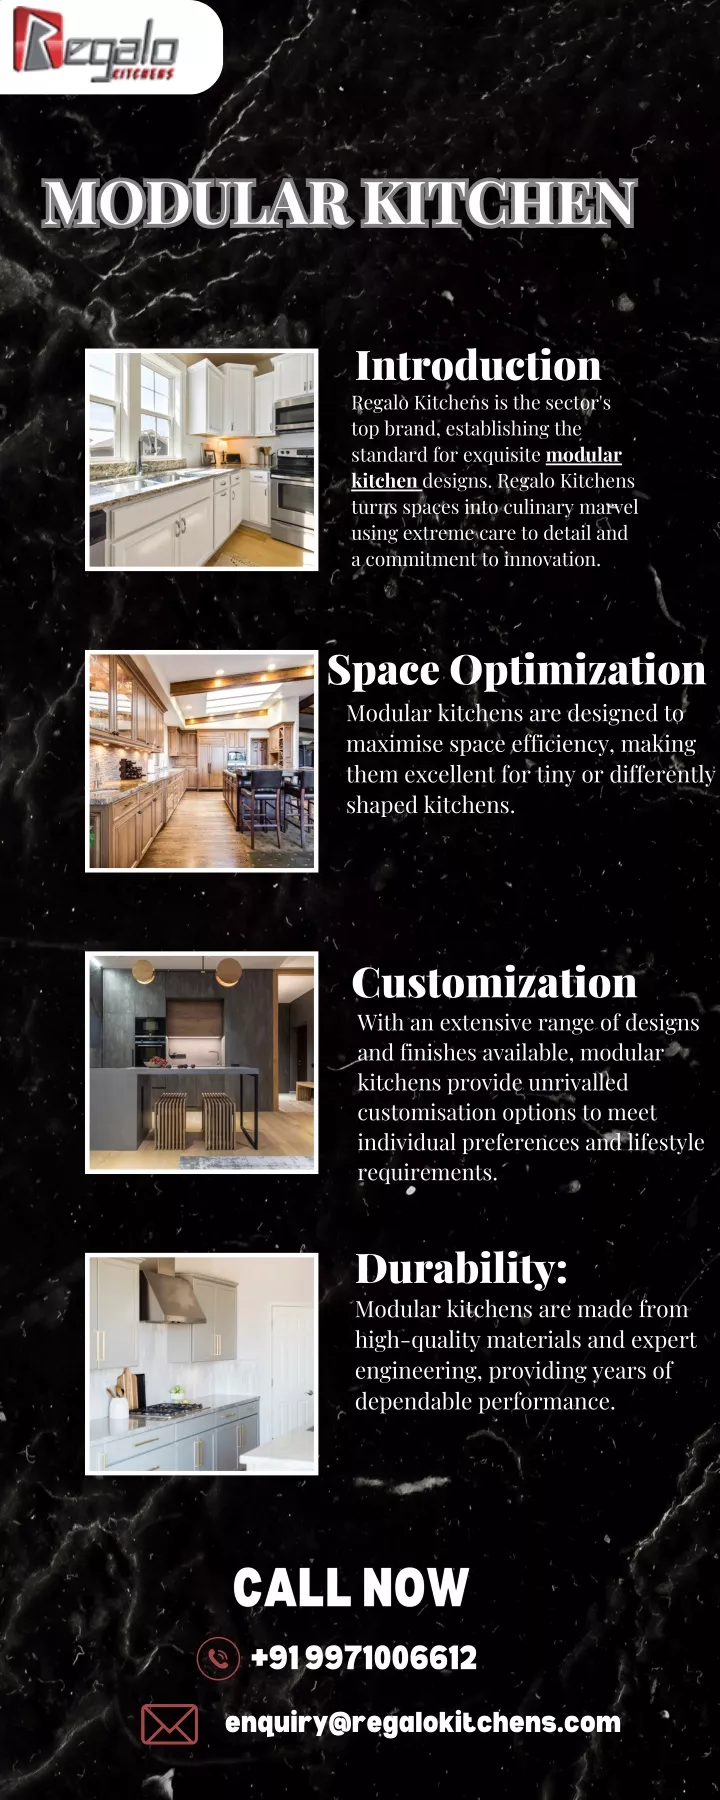 modular kitchen modular kitchen